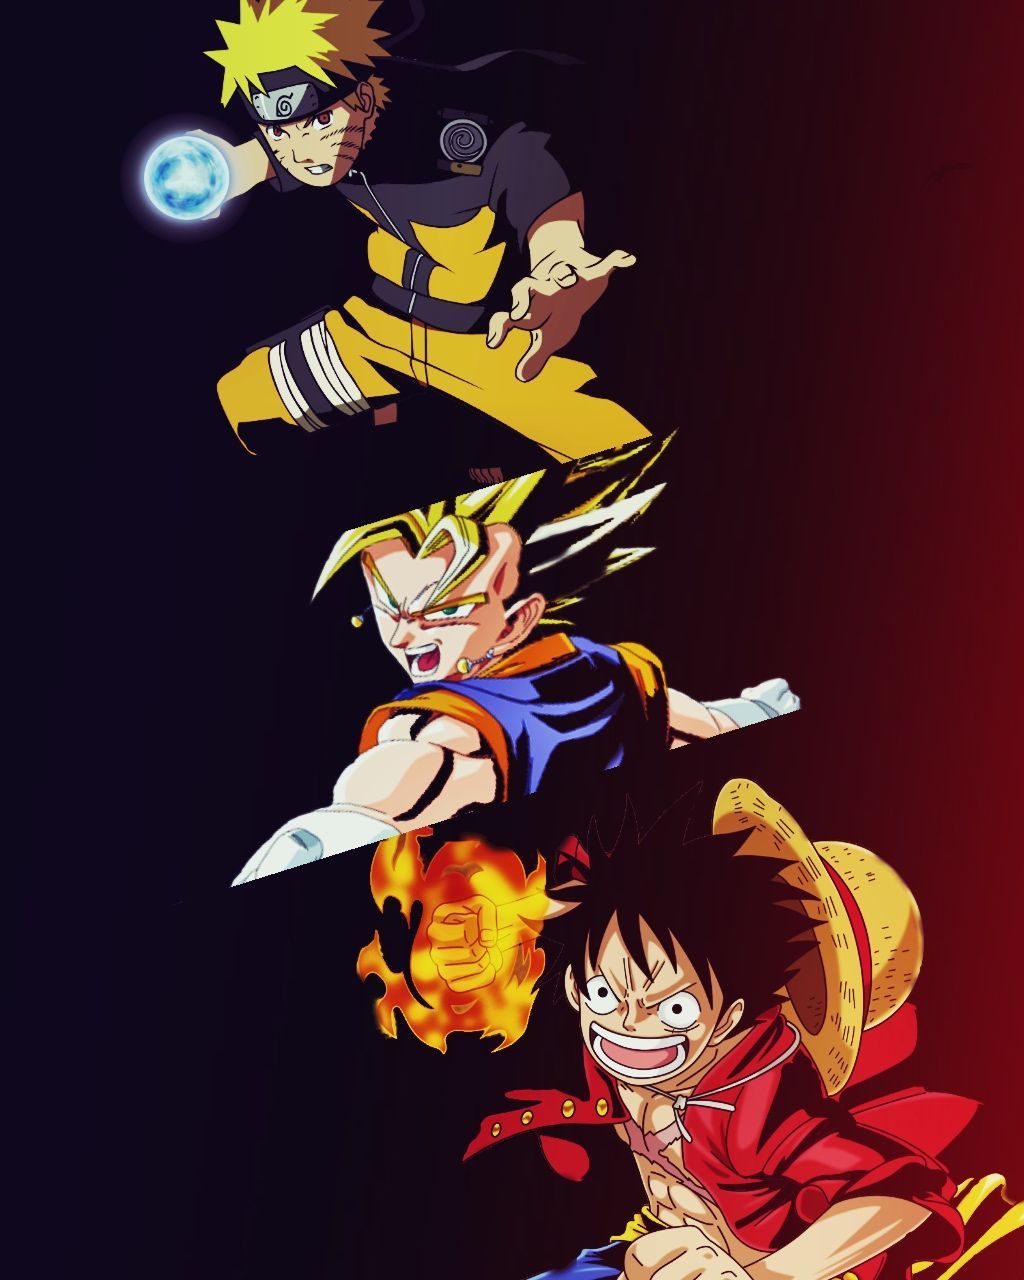 Wallpaper Goku Naruto Y Luffywalpaperlist.com